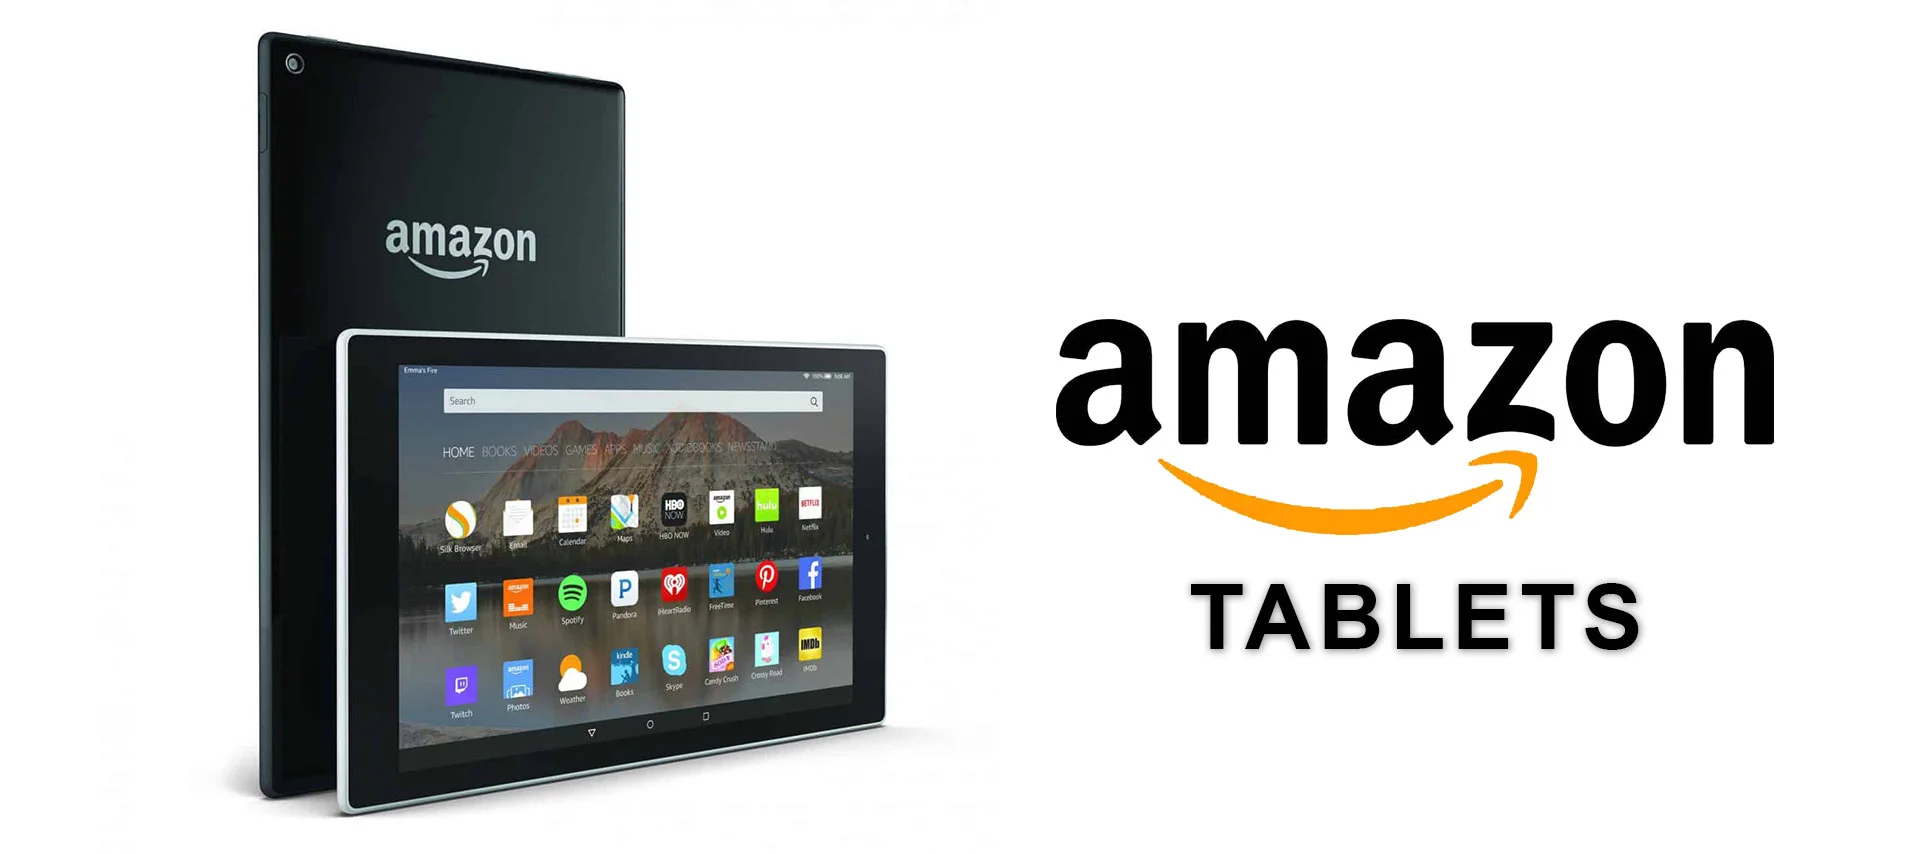 Amazon Tablet Price in Pakistan